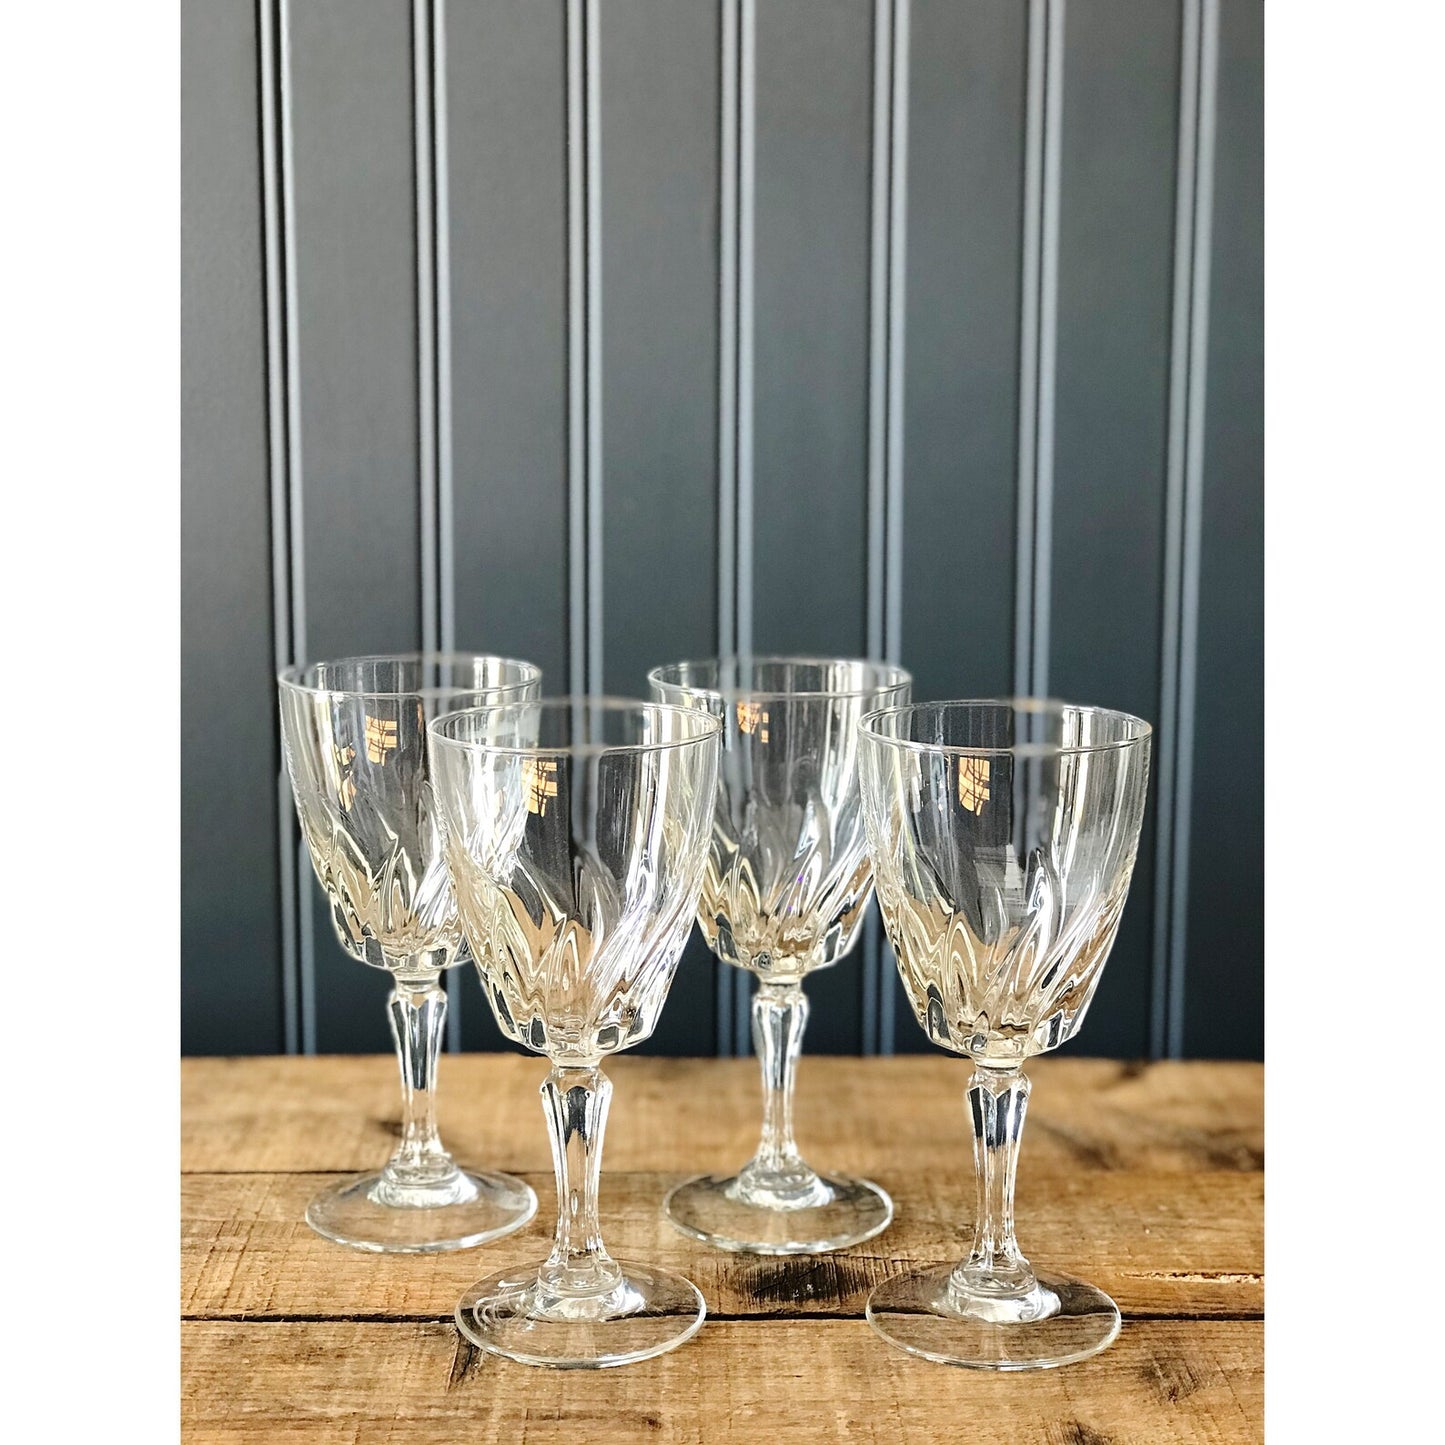 Set of 4 Petite Wine Glasses